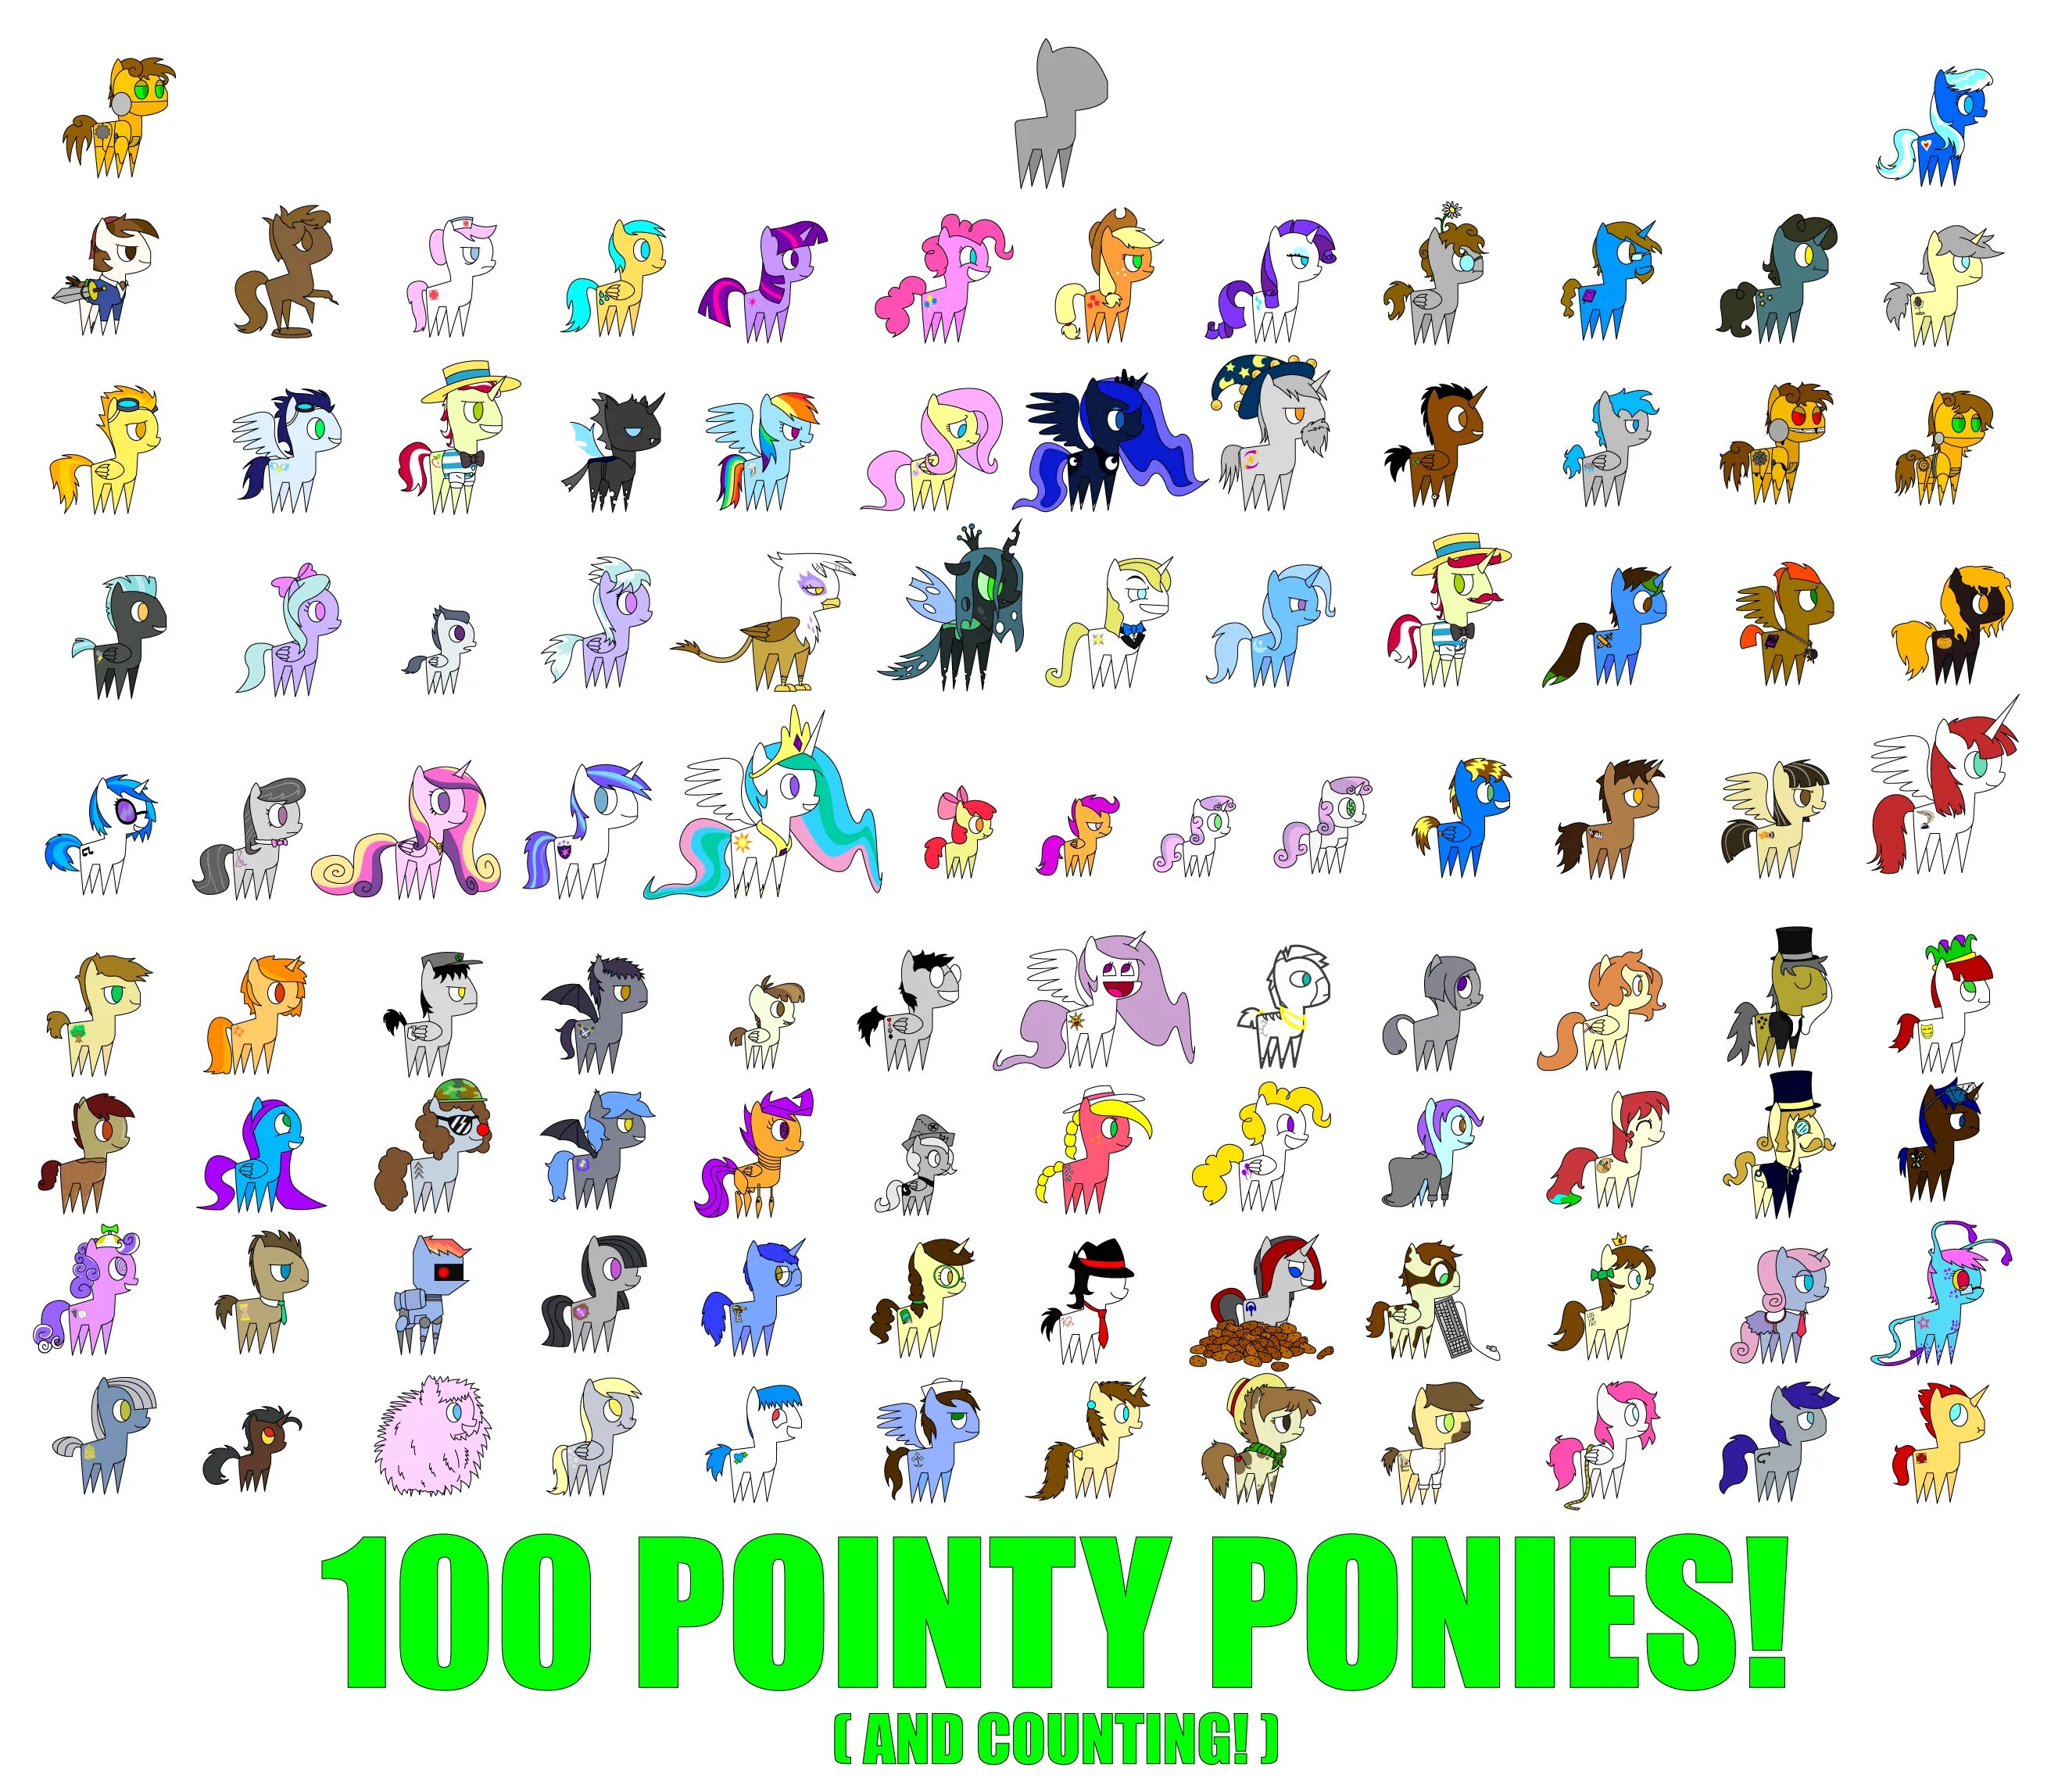 My little Pony как зовут всех. Имена персонаже из мультика майлитл Пгни. Имена персонажей МЛП. My little Pony герои имена. Имена пони pony